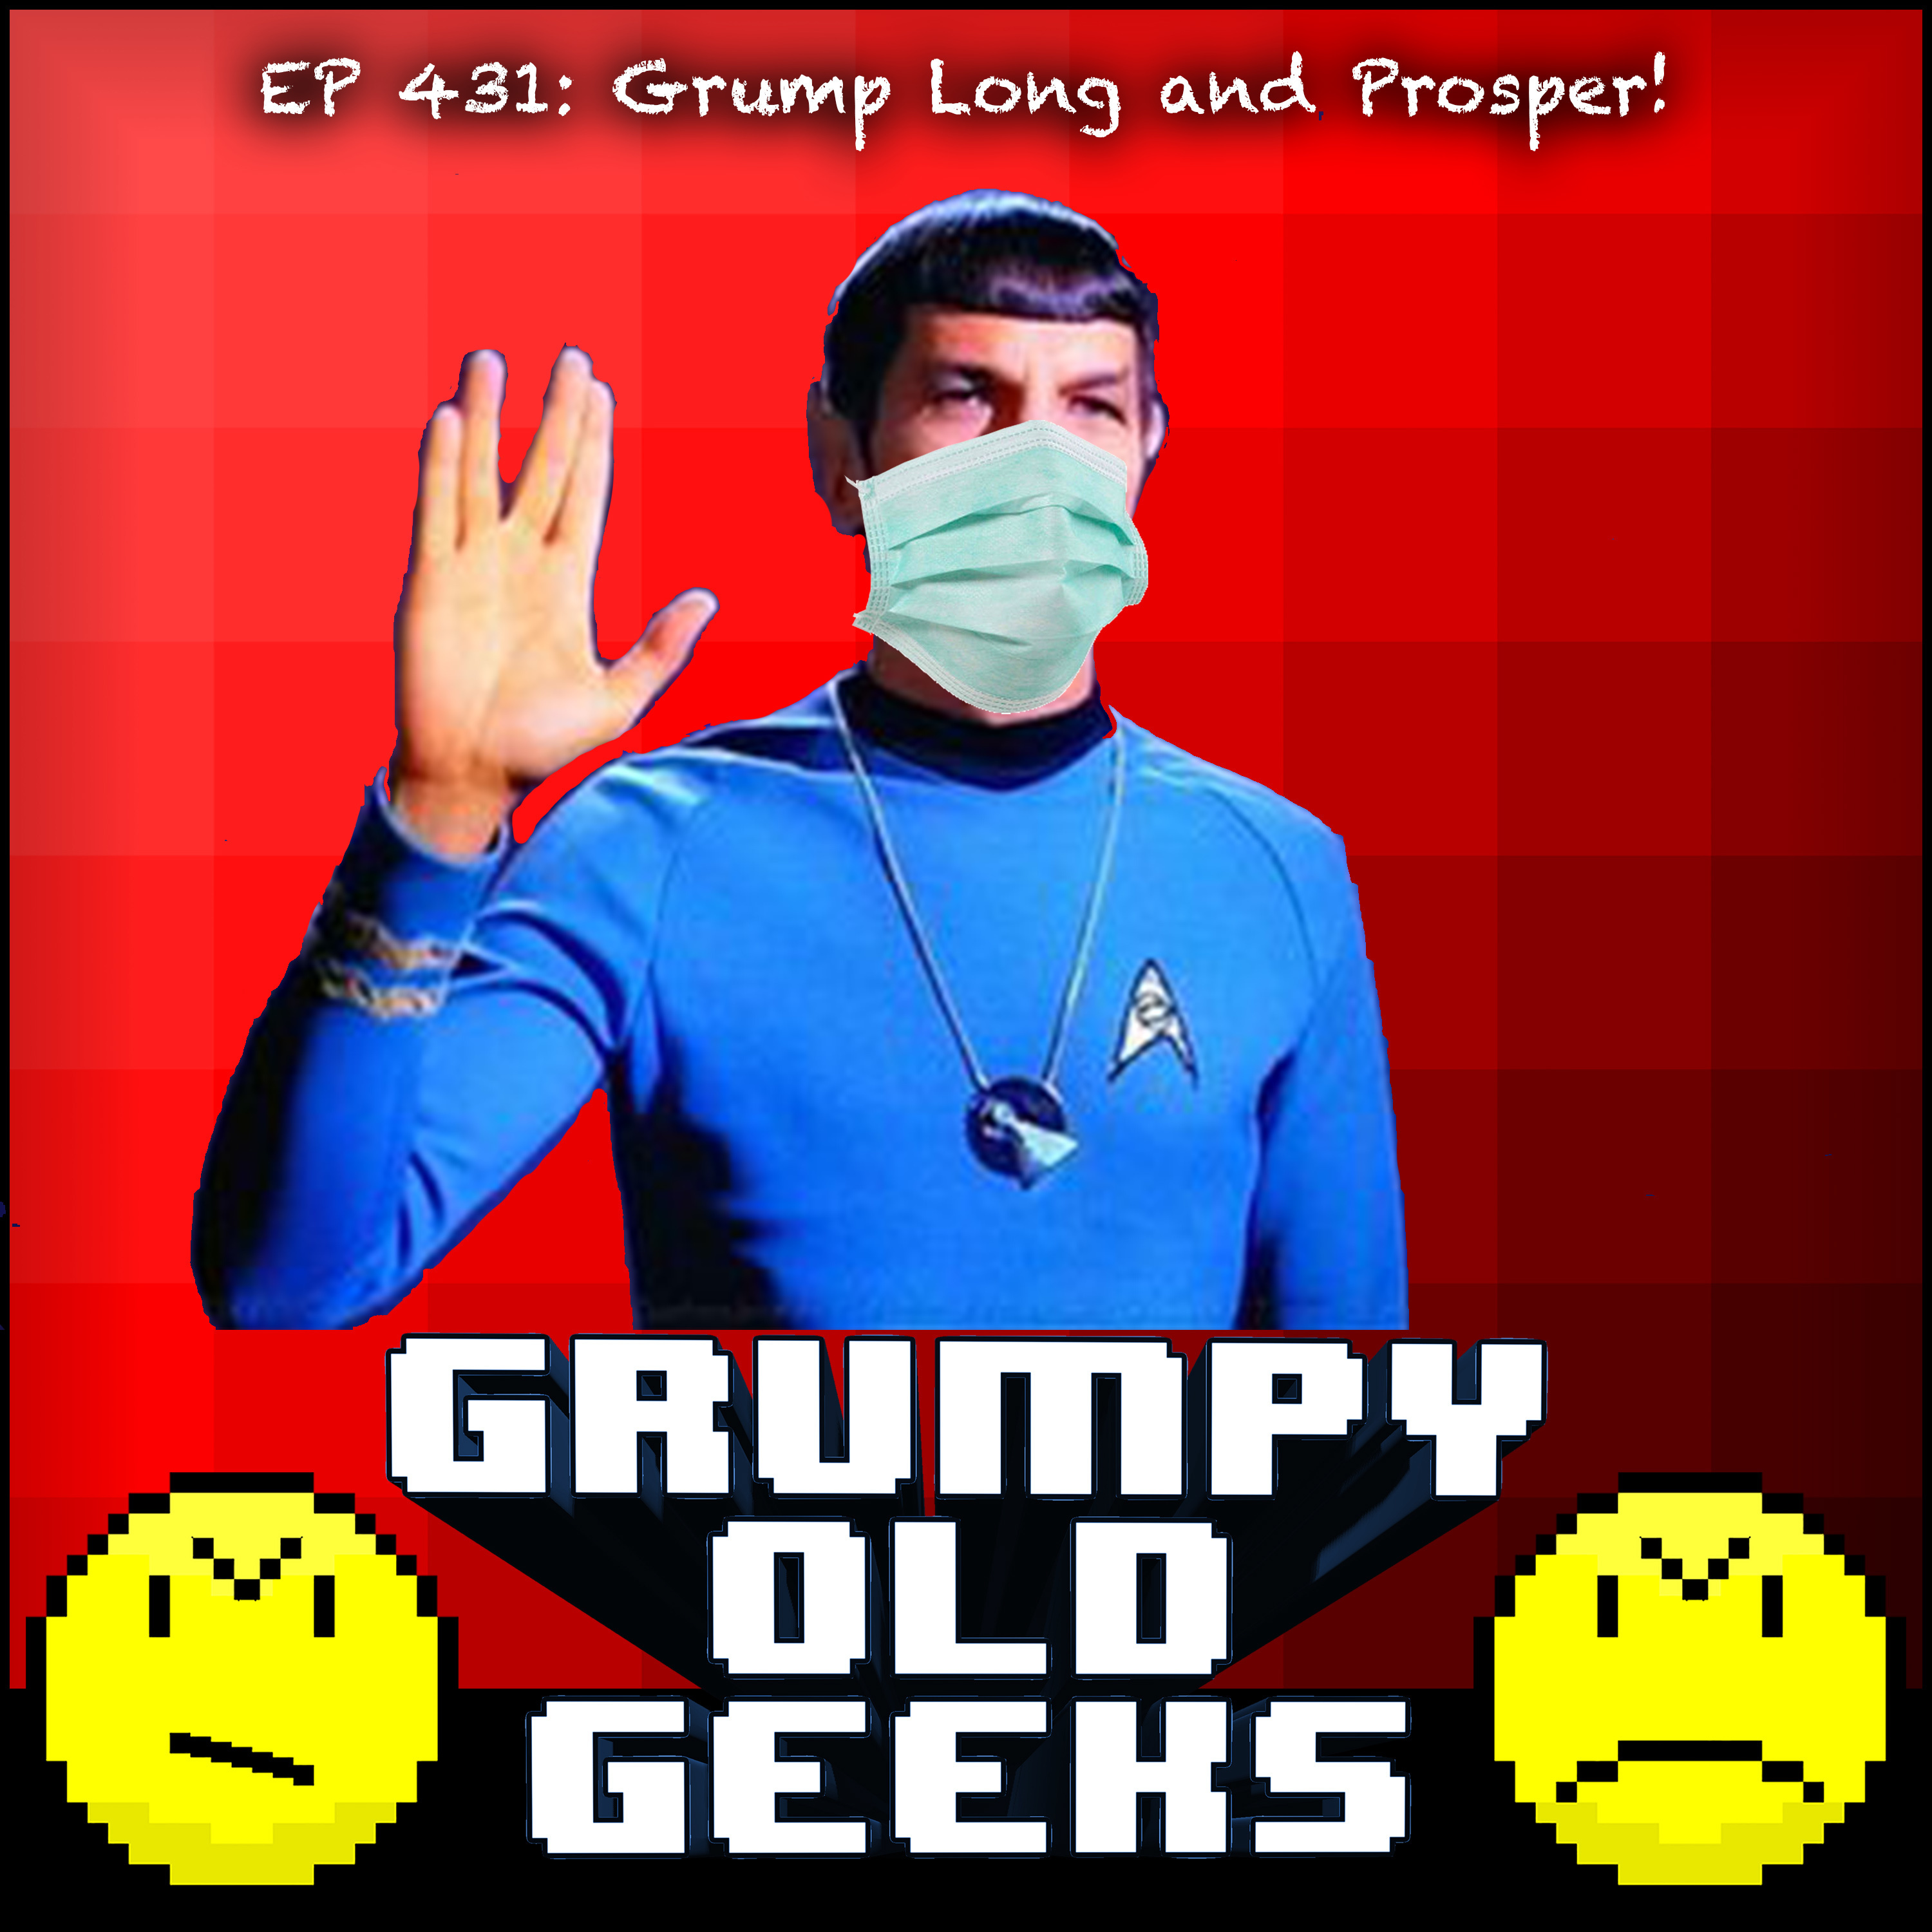 431: Grump Long and Prosper!